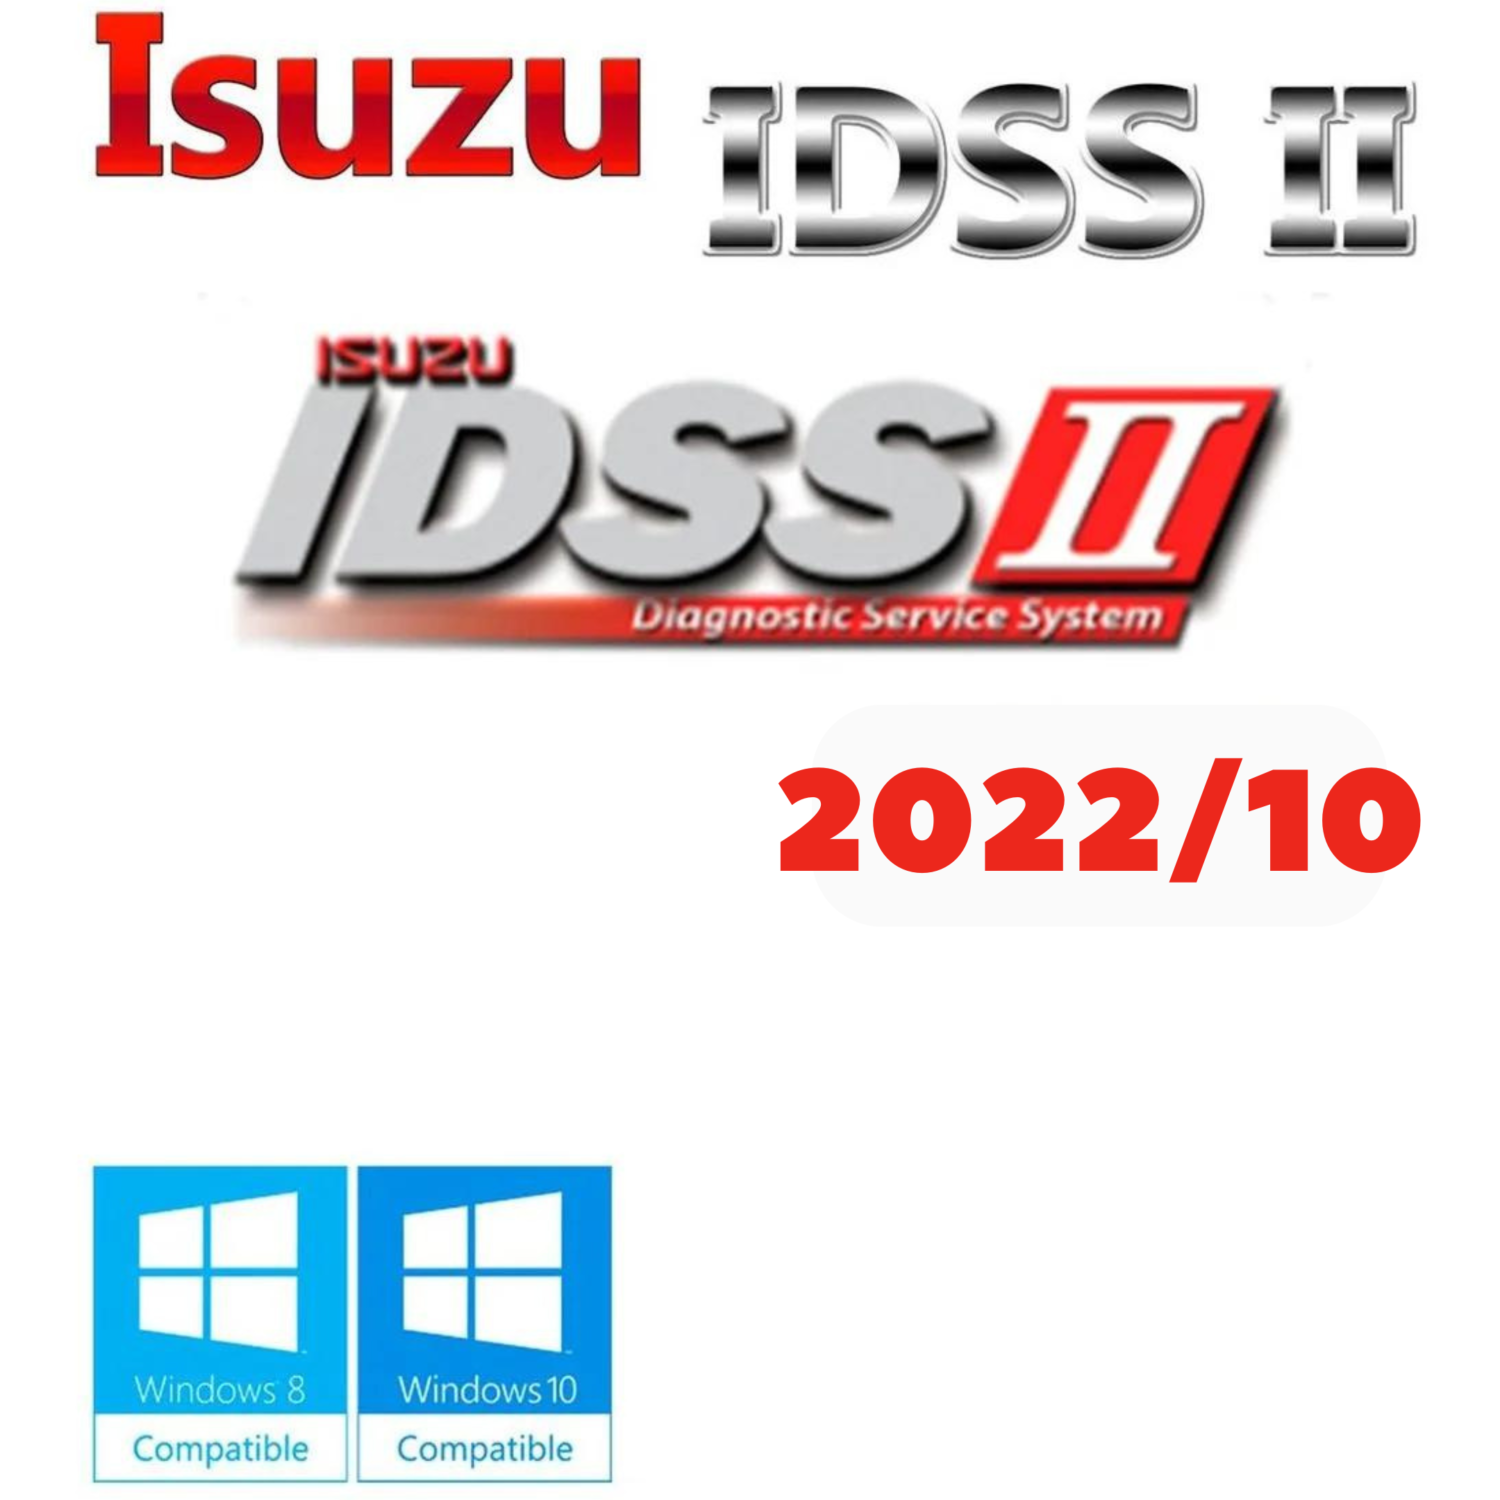 ISUZU US IDSS II 2022/12 Diagnose-Service-System für Nexiq USB Link